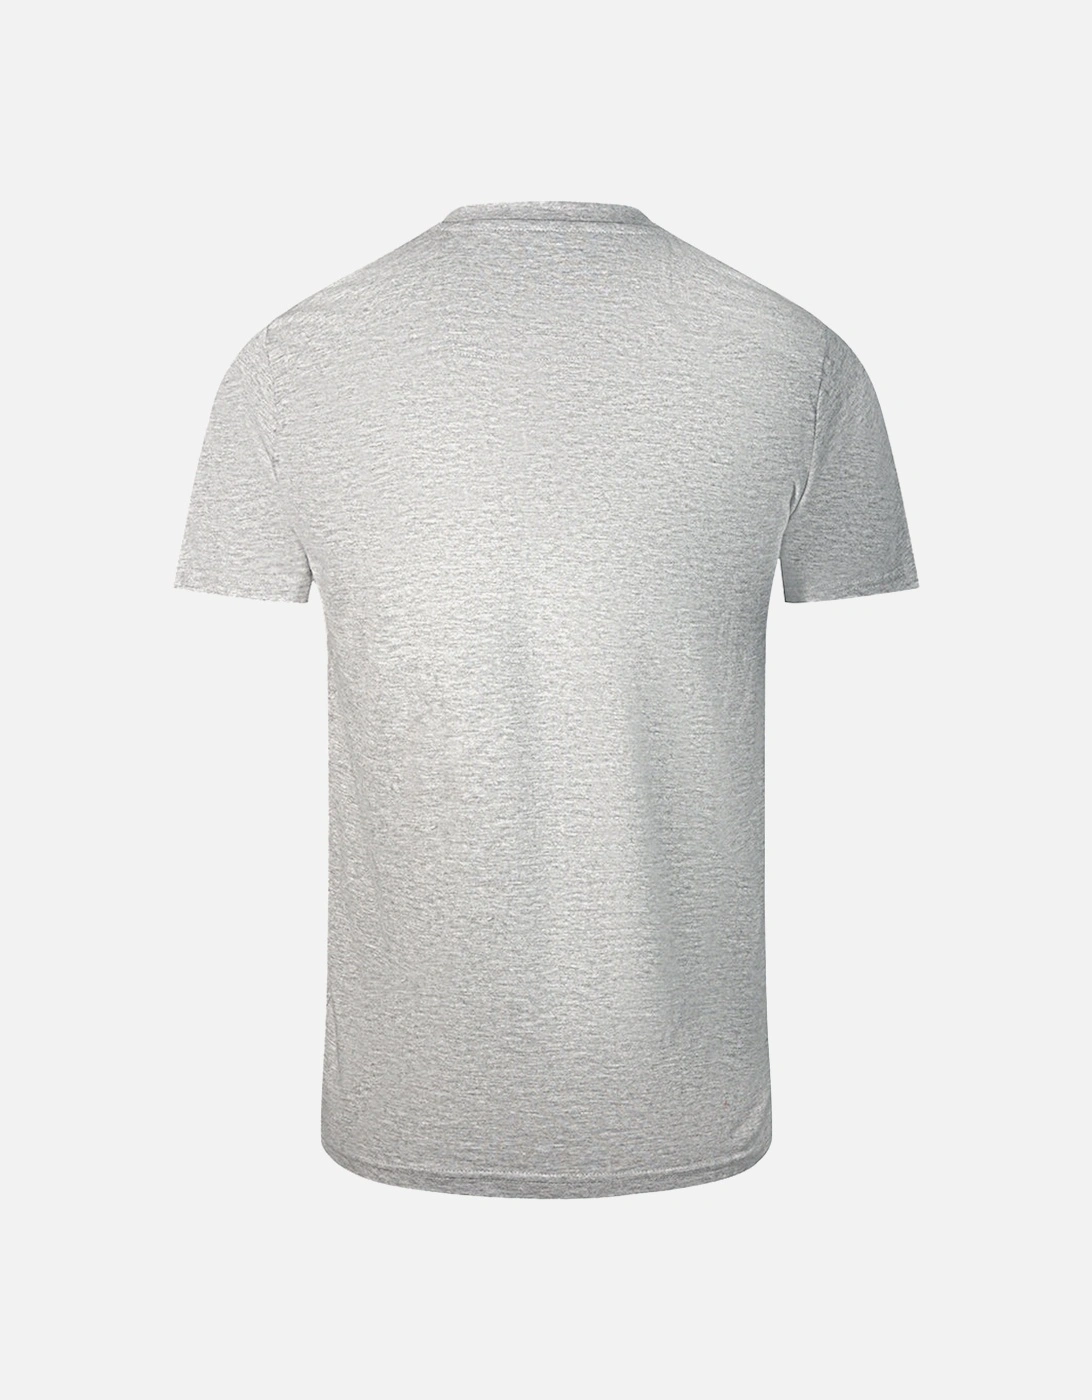 Cavalli Class Leopard Print Silhouette Grey T-Shirt